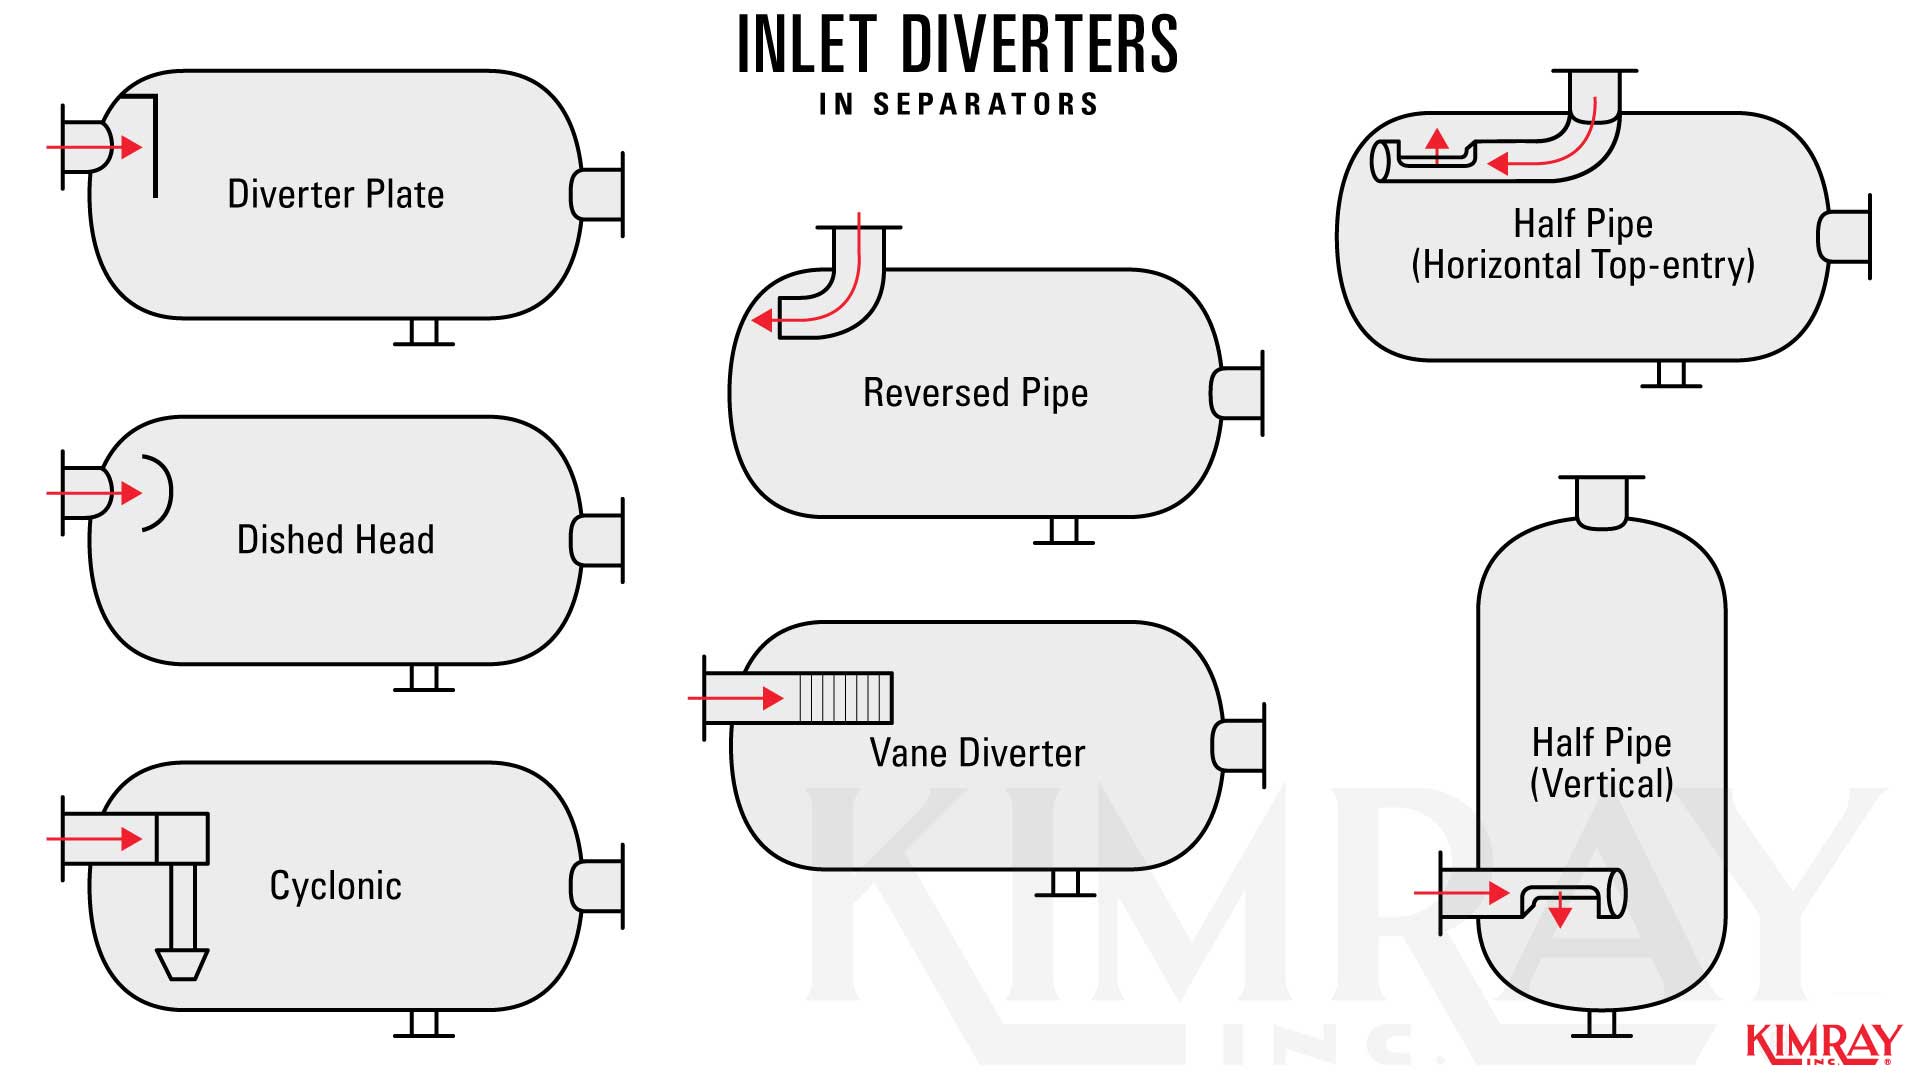 Inlet Diverters